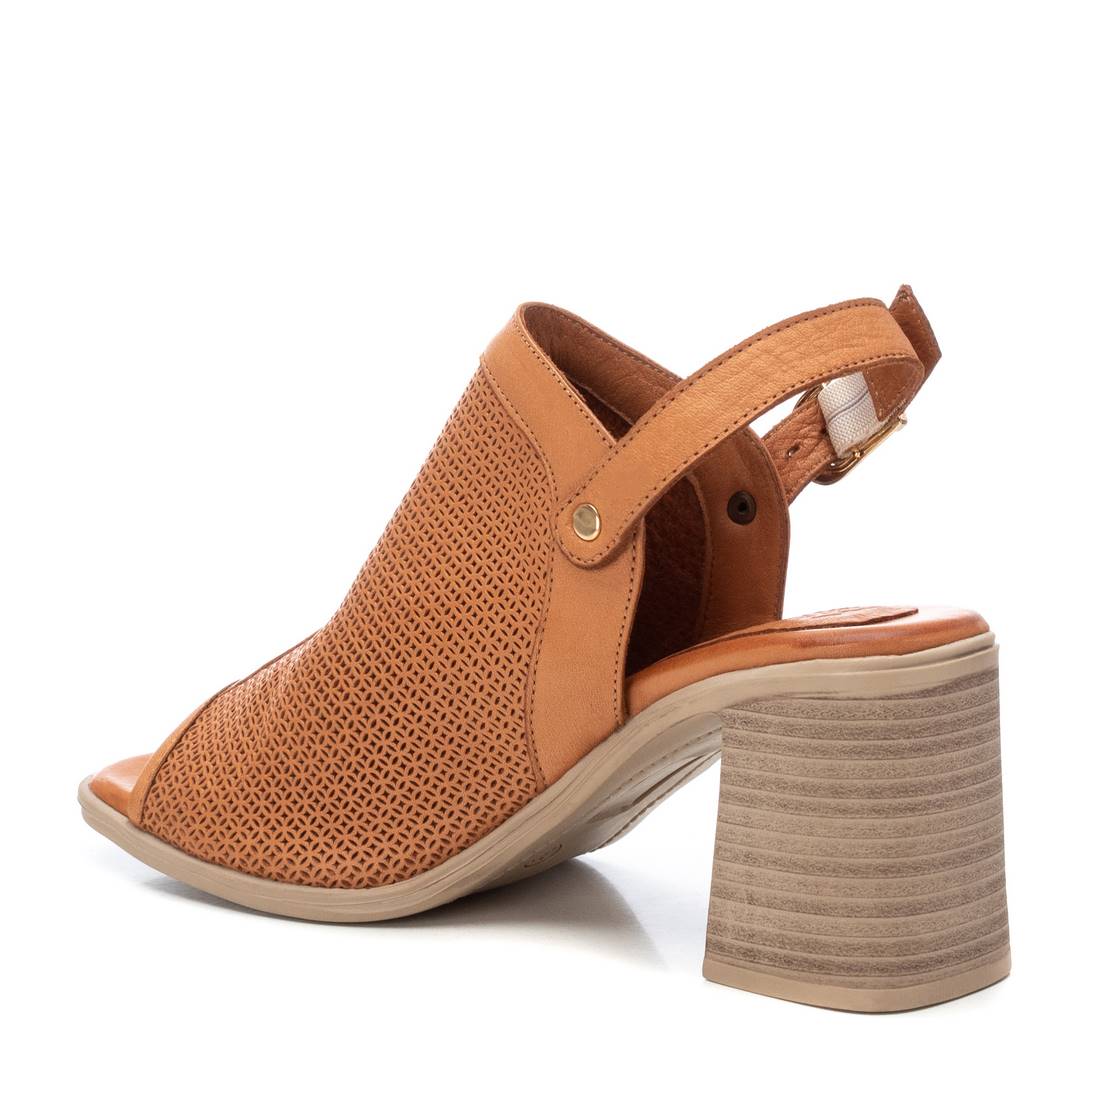 Carmela - Leather Sandal in Tan 161597